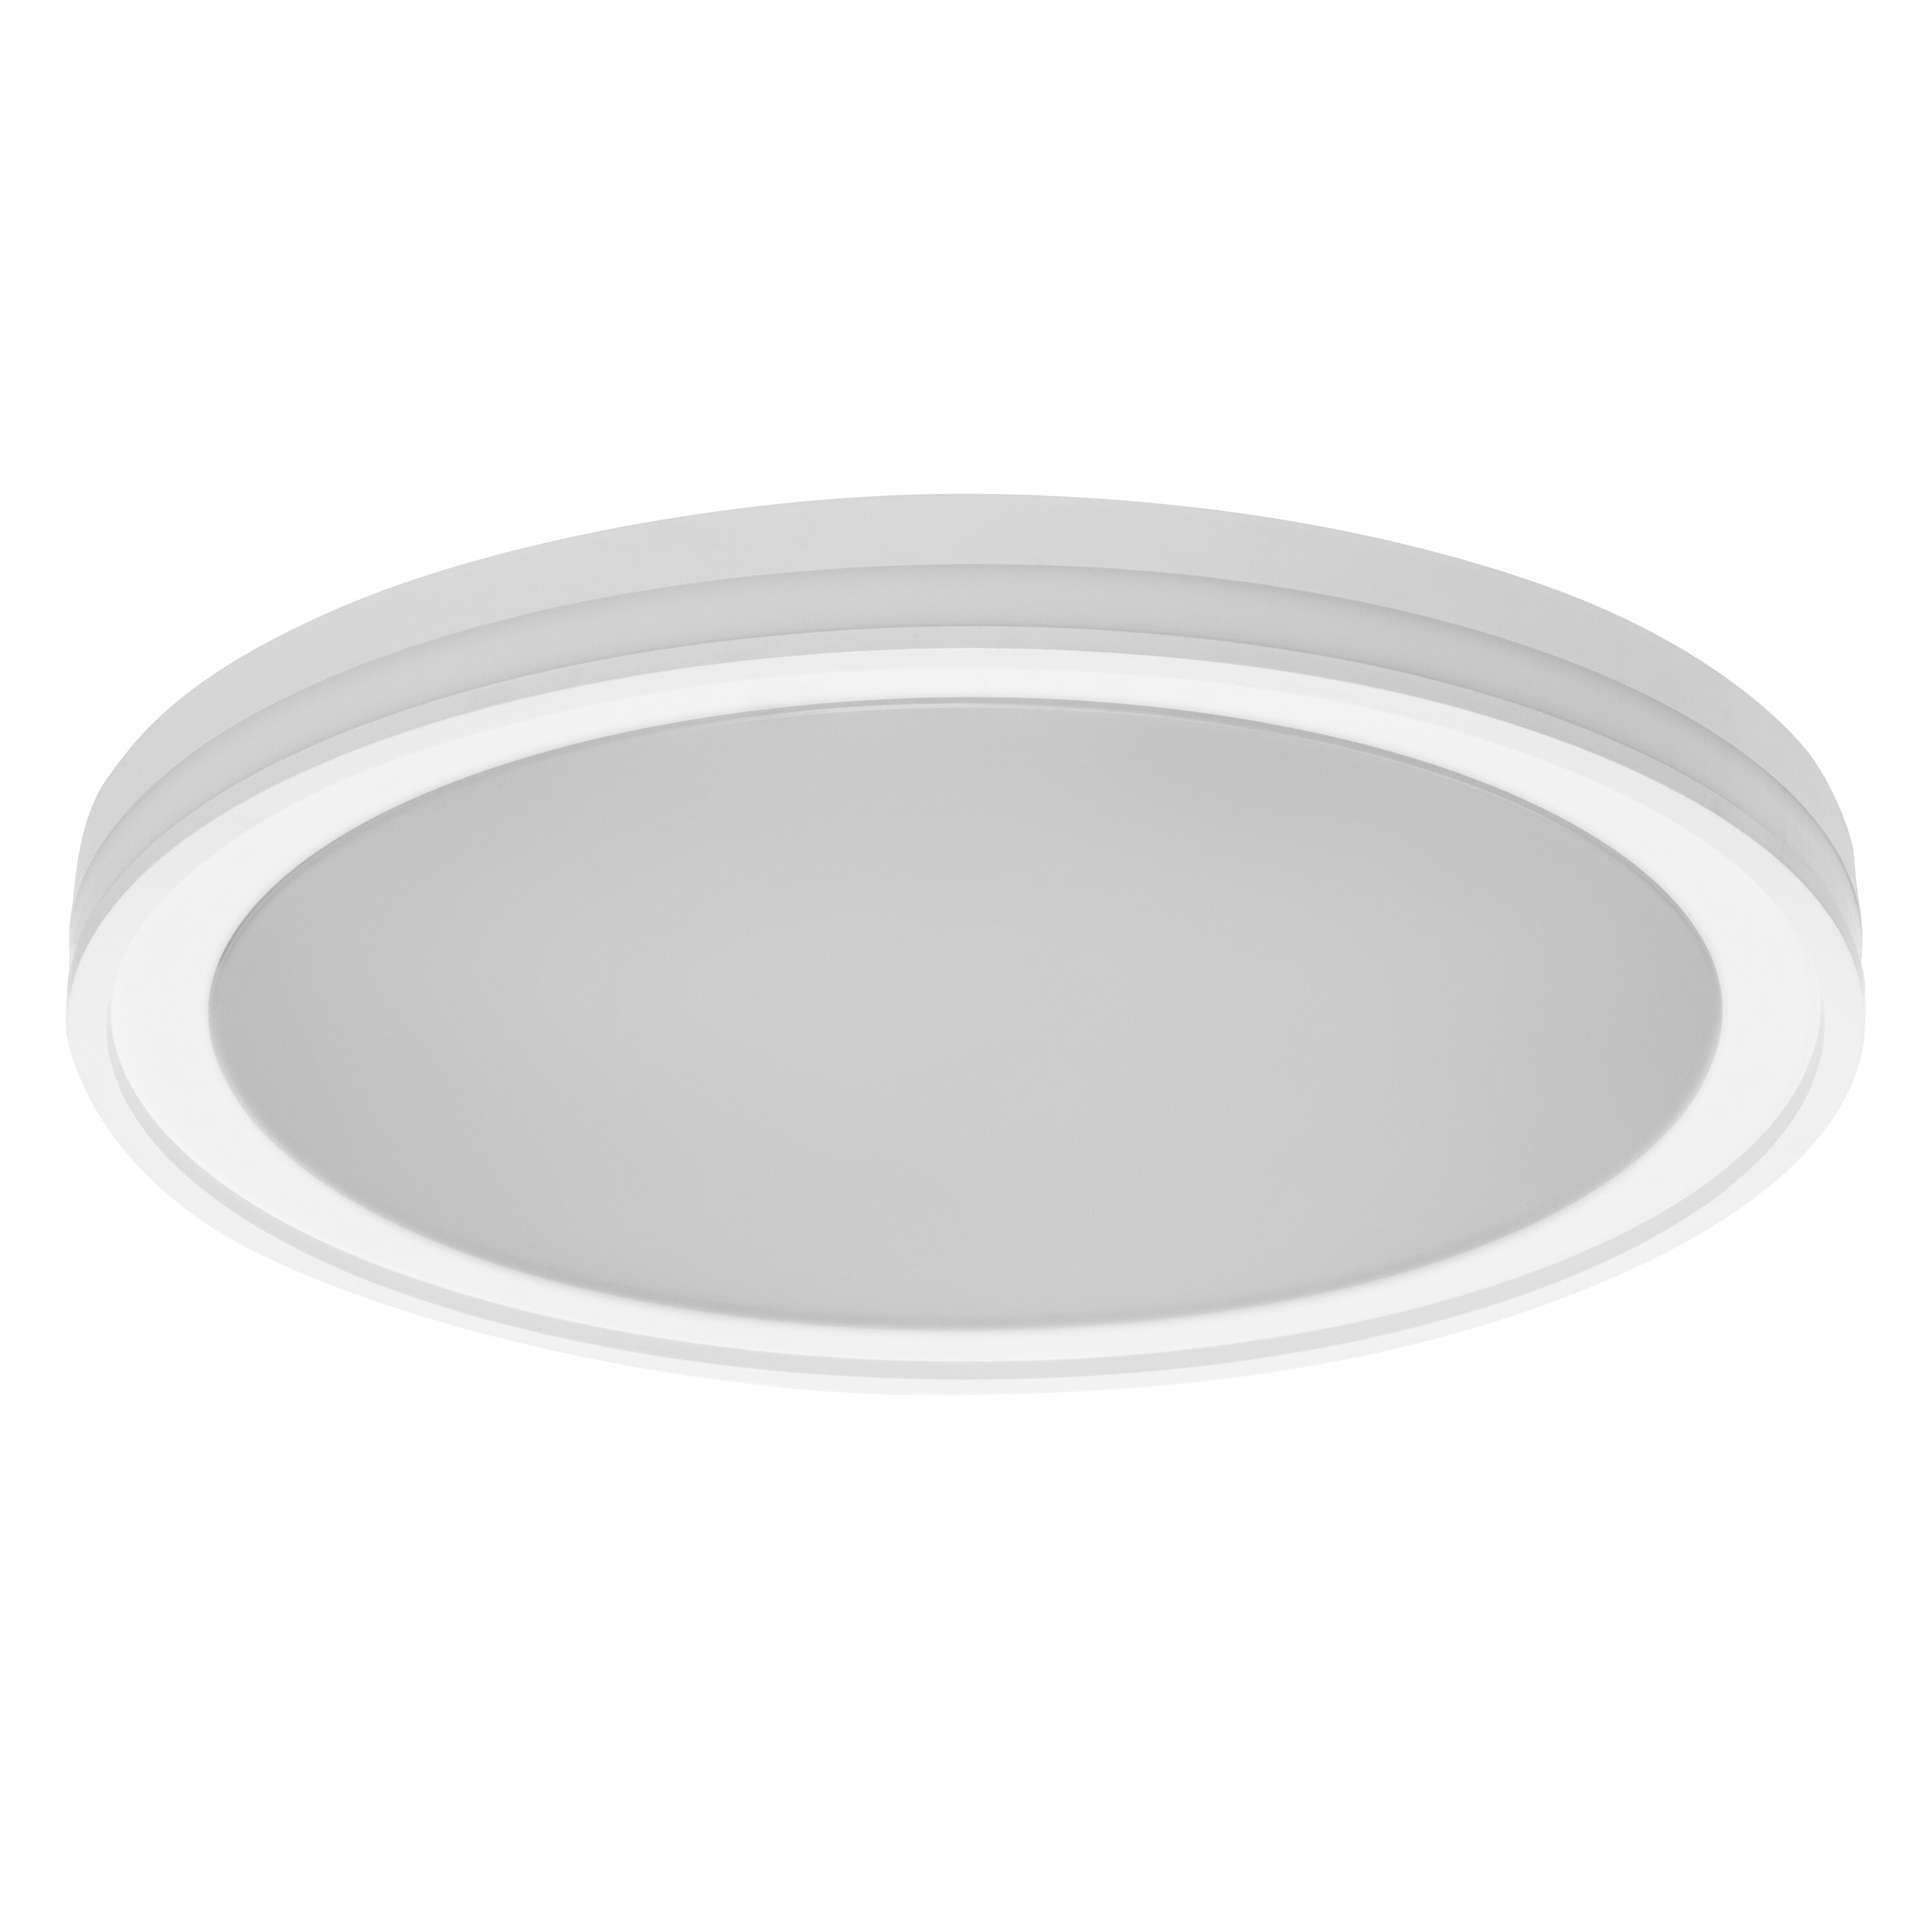 Orbis Lichfarbe SMART+ LEDVANCE Deckenspots Circle WIFI änderbar